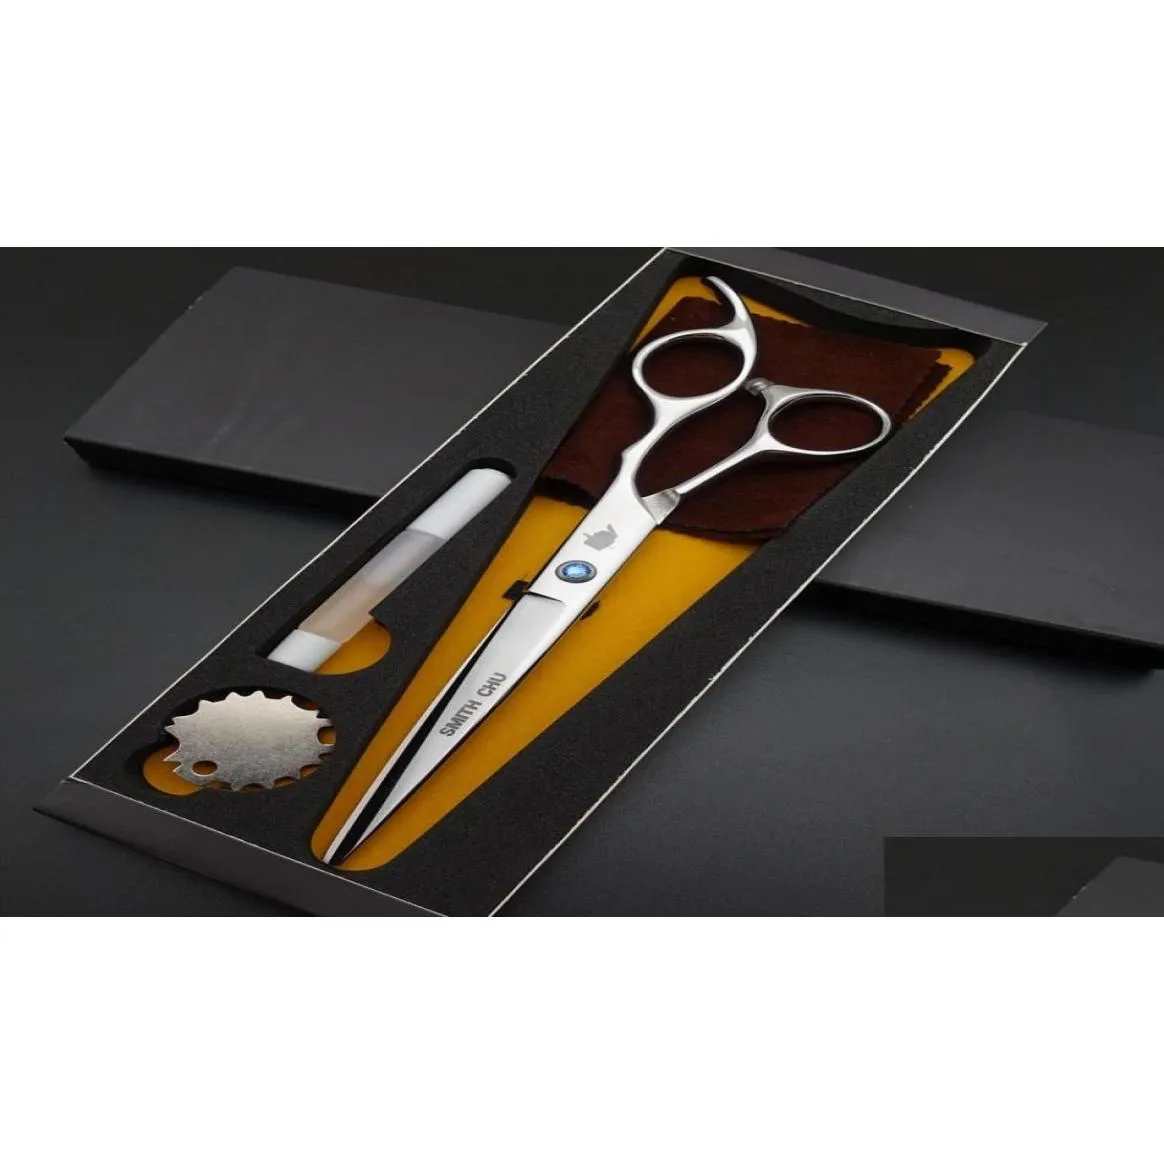 SMITH CHU Professional Hair dressing scissors 7inch straight cuttingCurved scissors Barber shears scissors kits S036 LY1912317462508